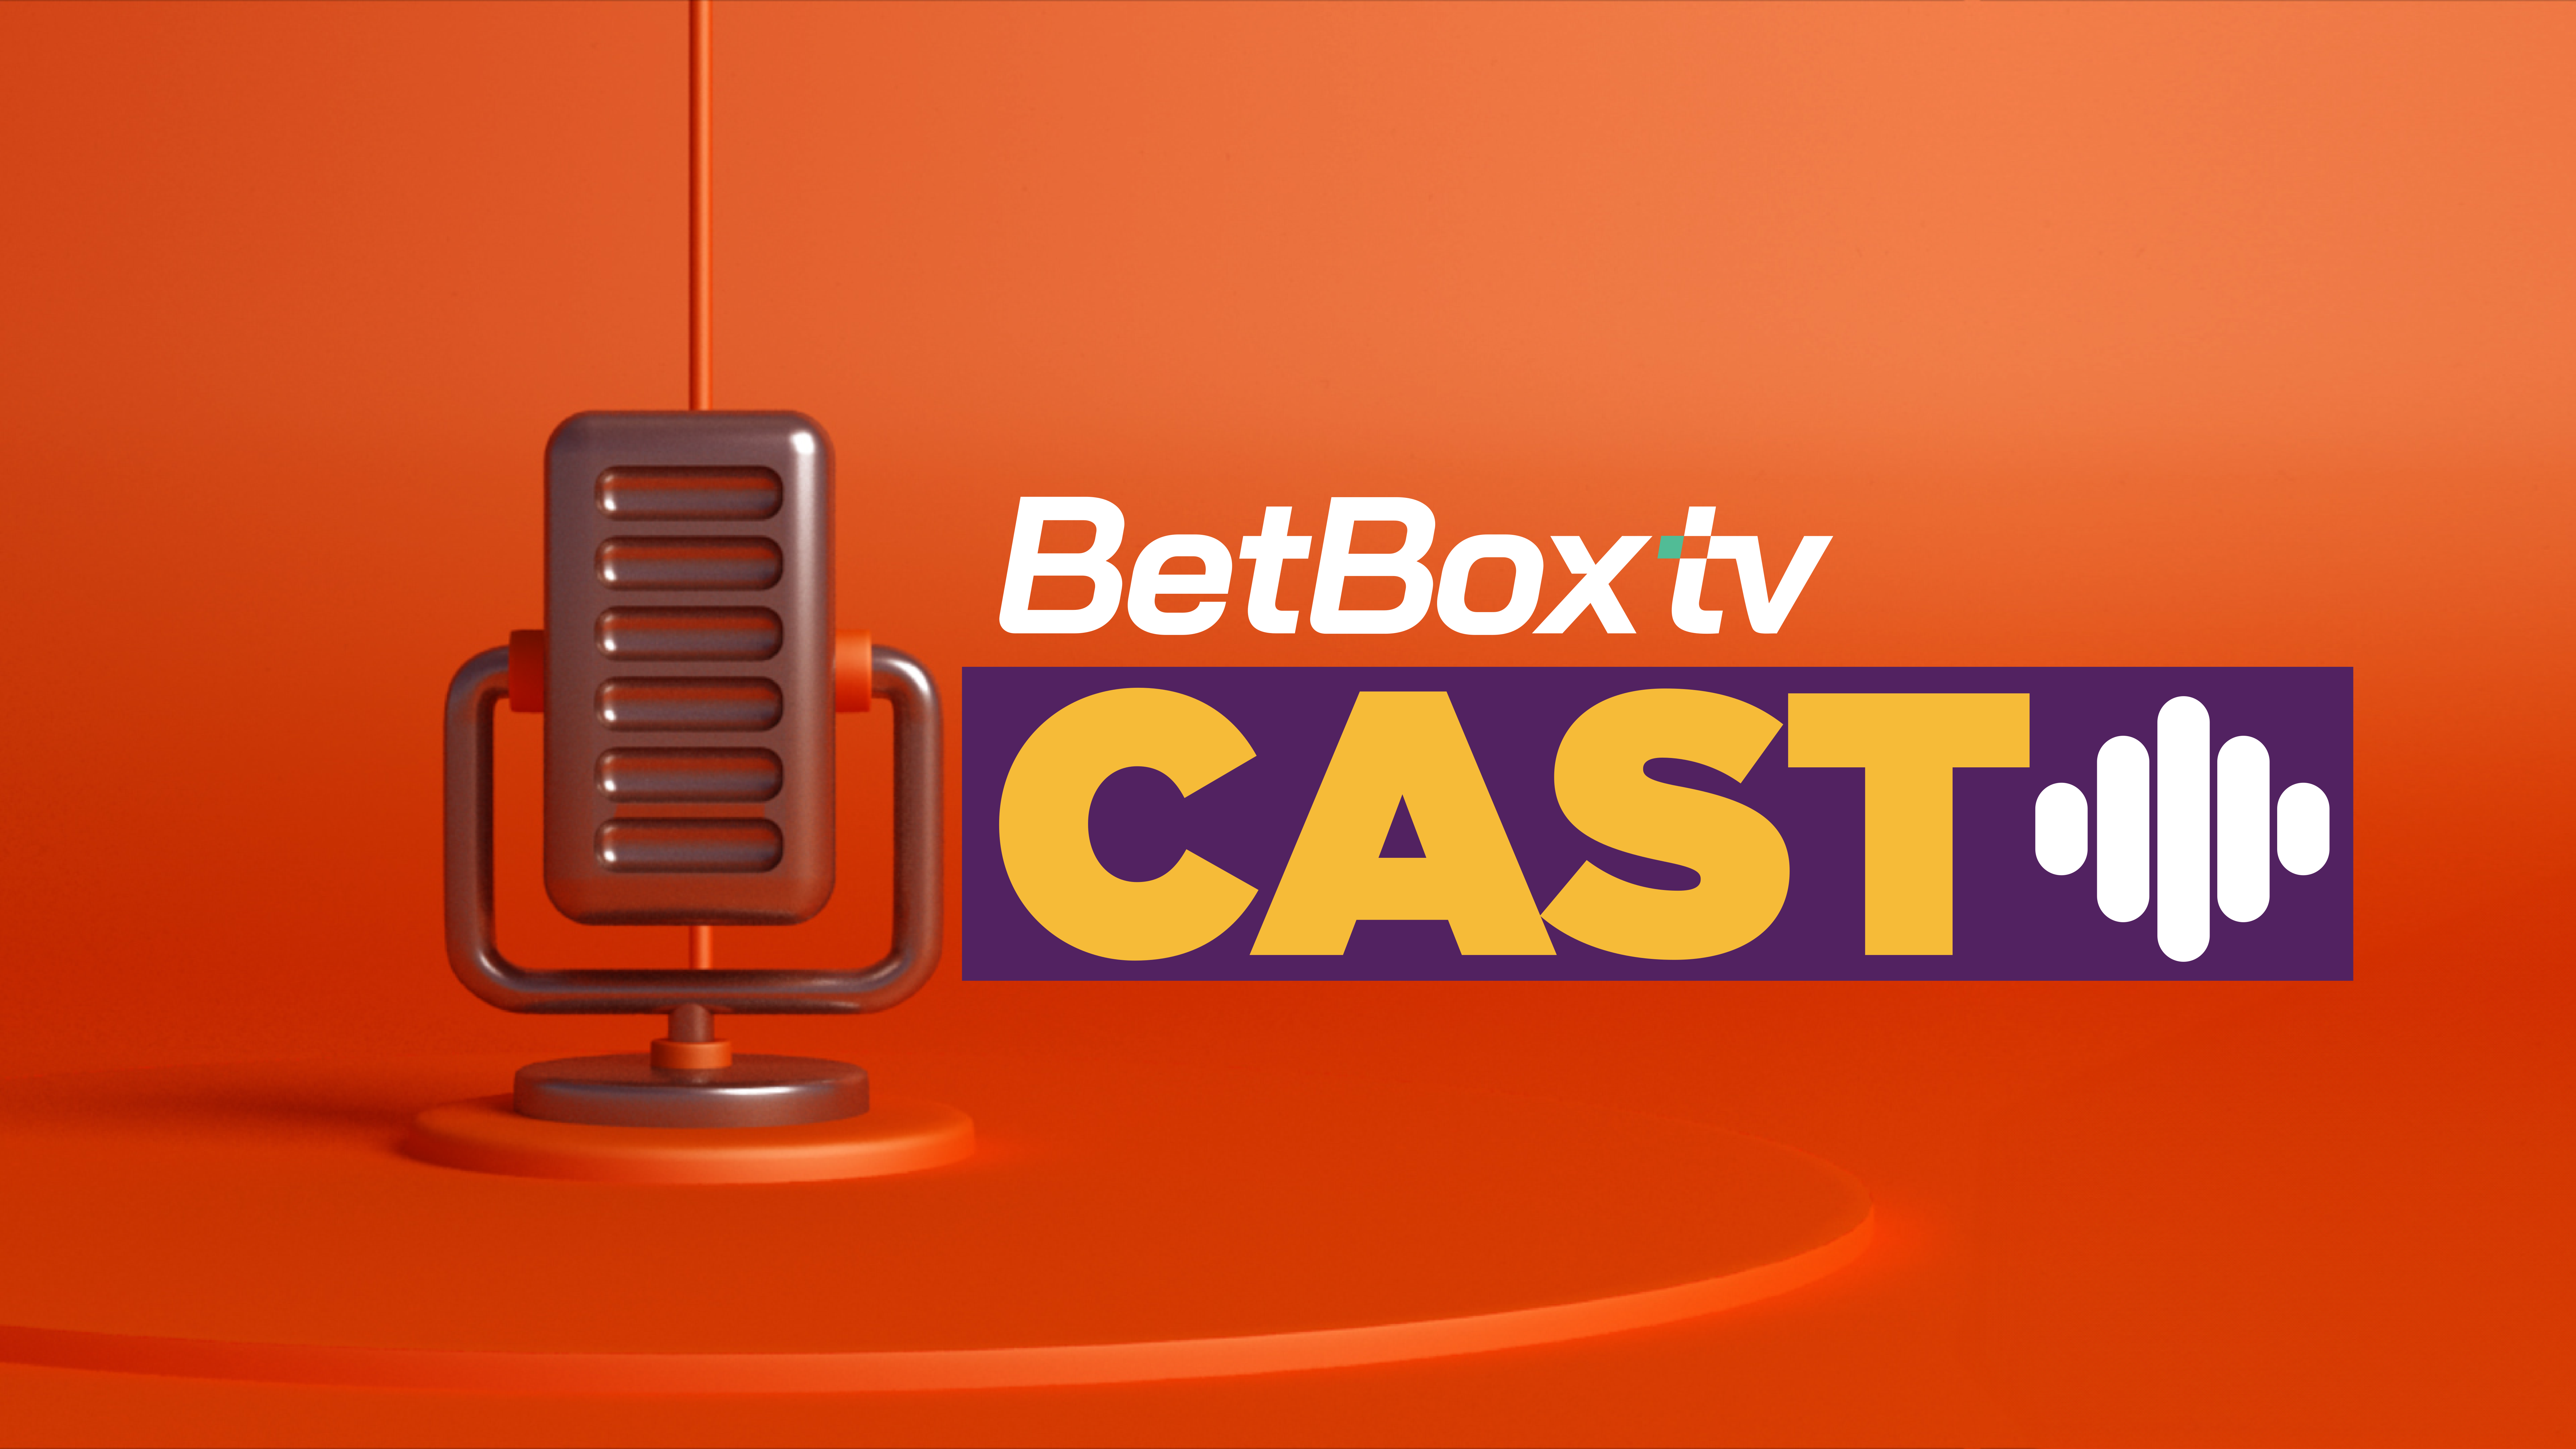 BetBox tv Cast